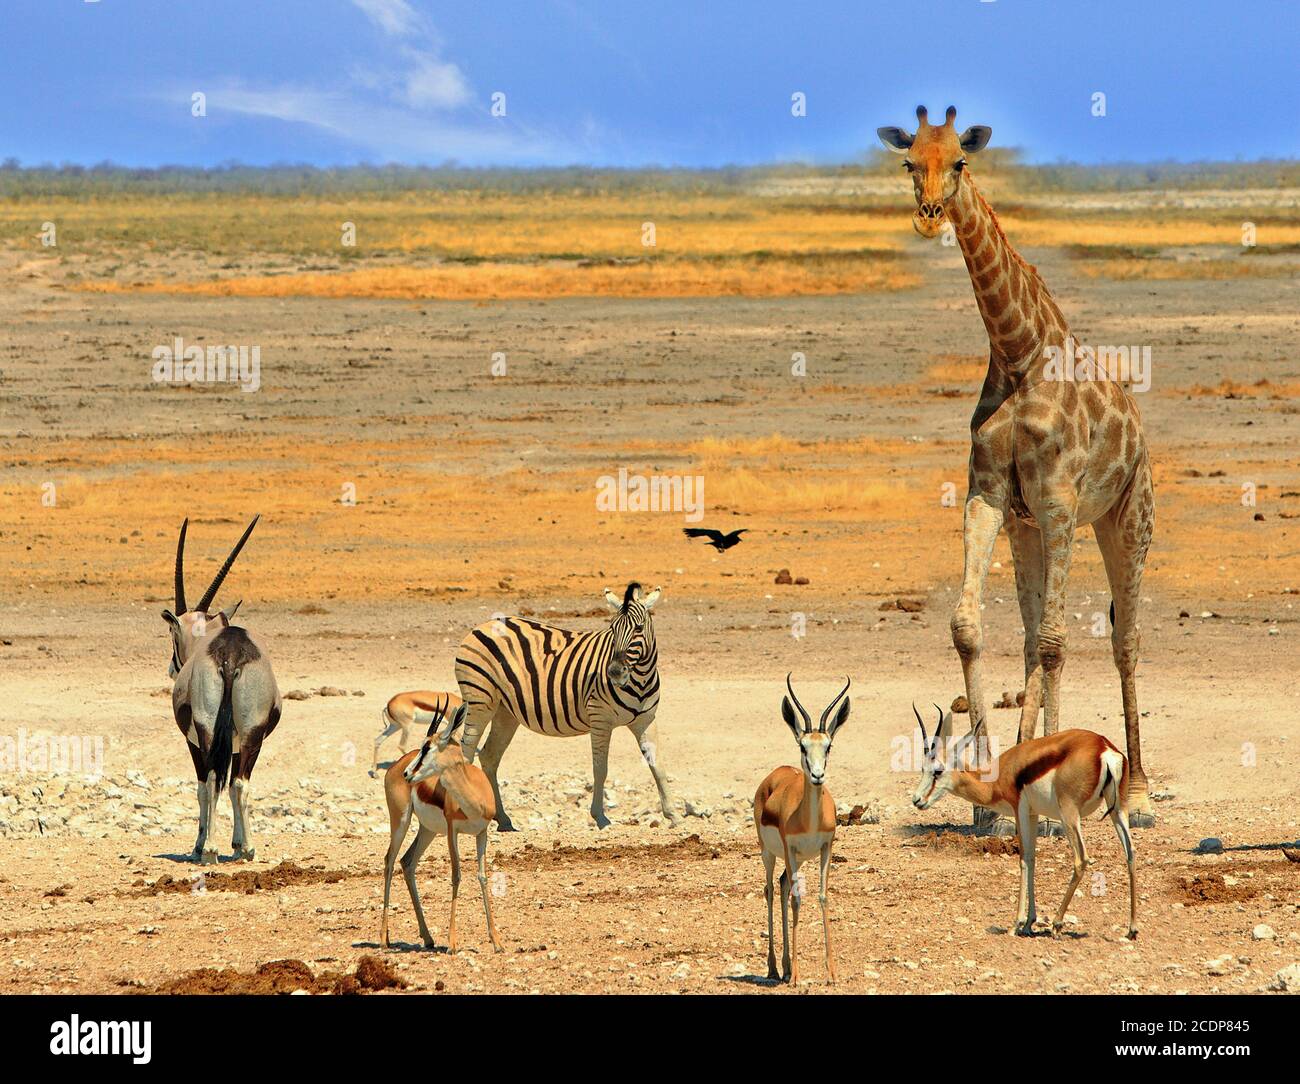 Giraffe, Gemsbok Oryx, Zebra and Impala standing on the dry arid plains in Etosha National Park, Namibia Stock Photo